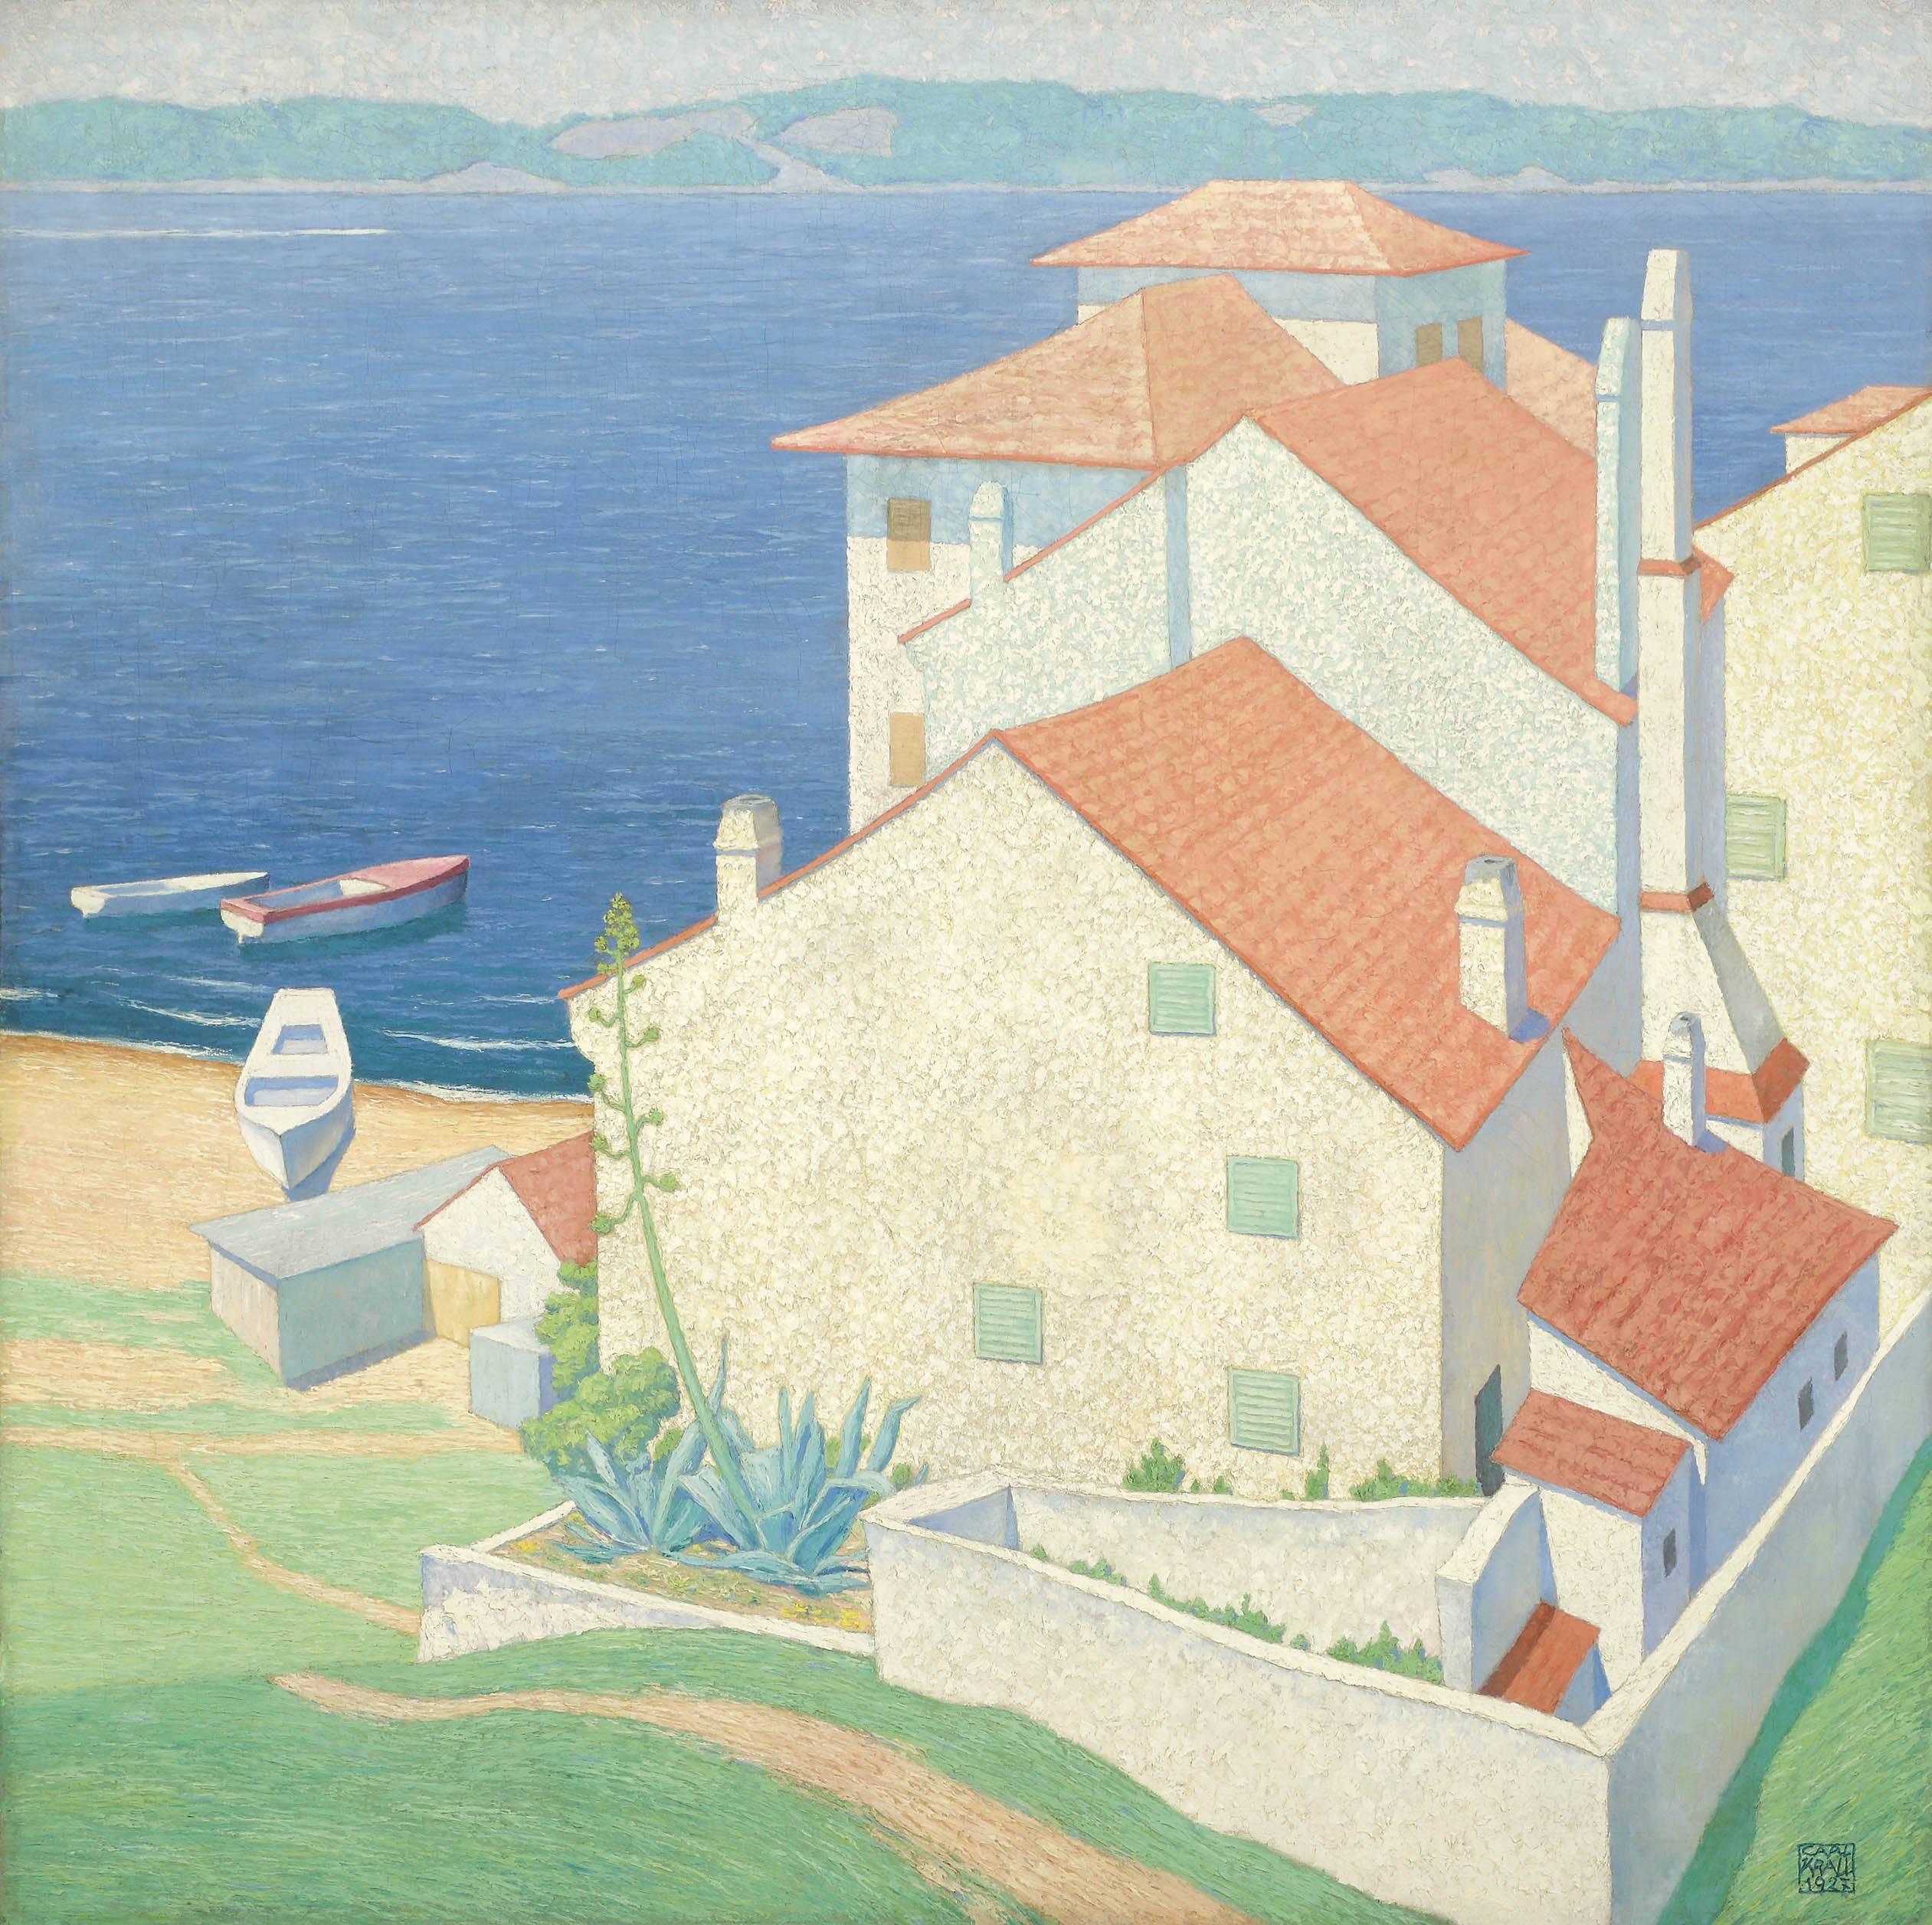 Lussin (Losinj), Croatia, 1927 - Painting by Carl Krall